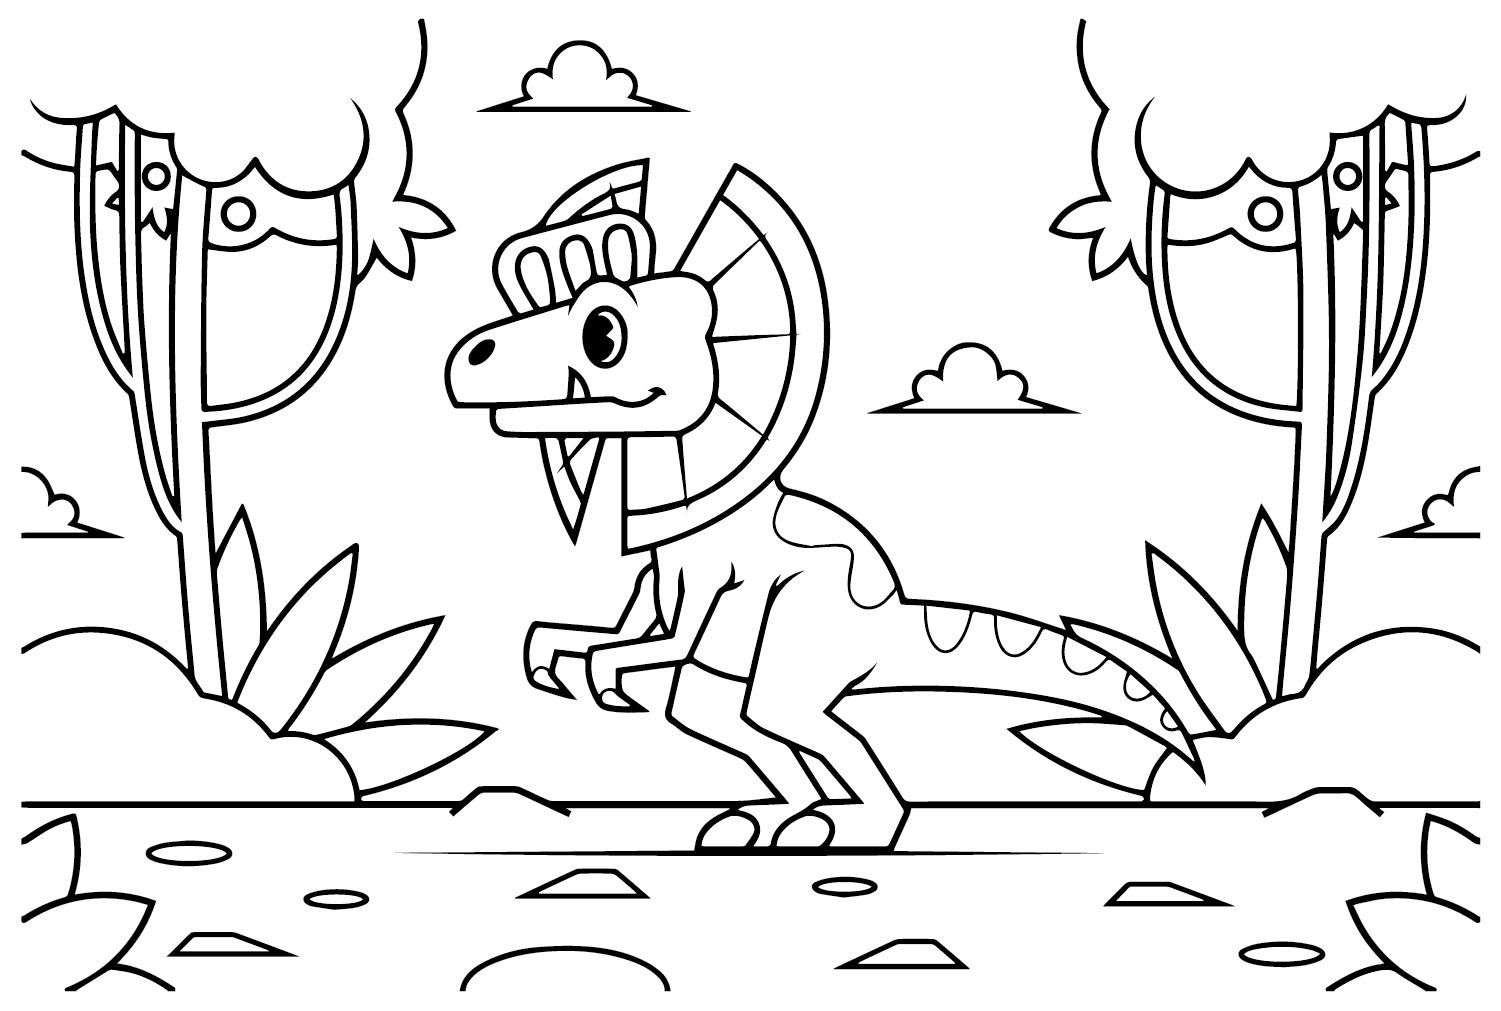 Dilophosaurus imagem para colorir